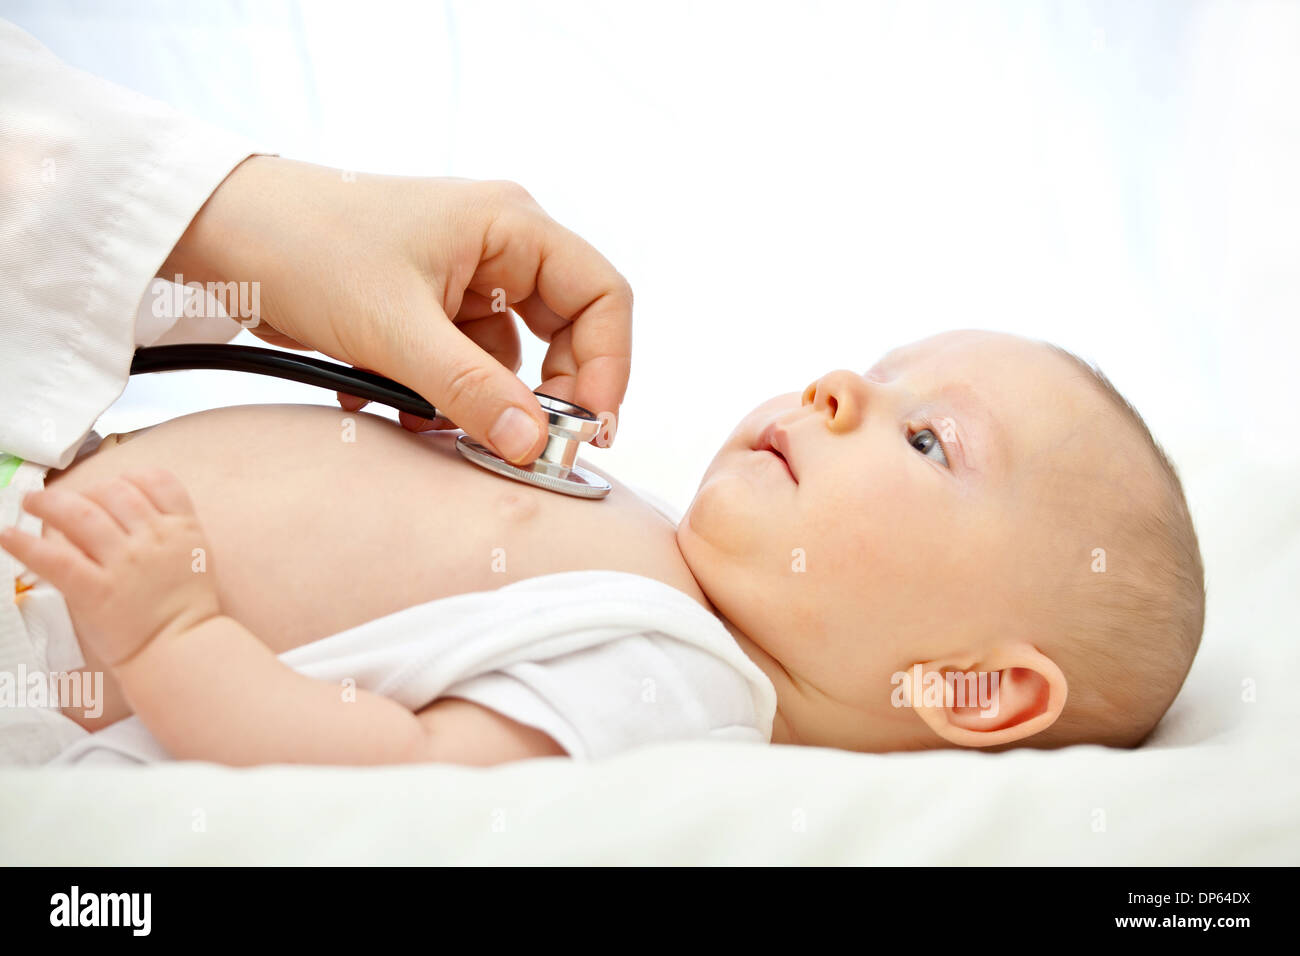 baby portrait and pediatrician check Stock Photo